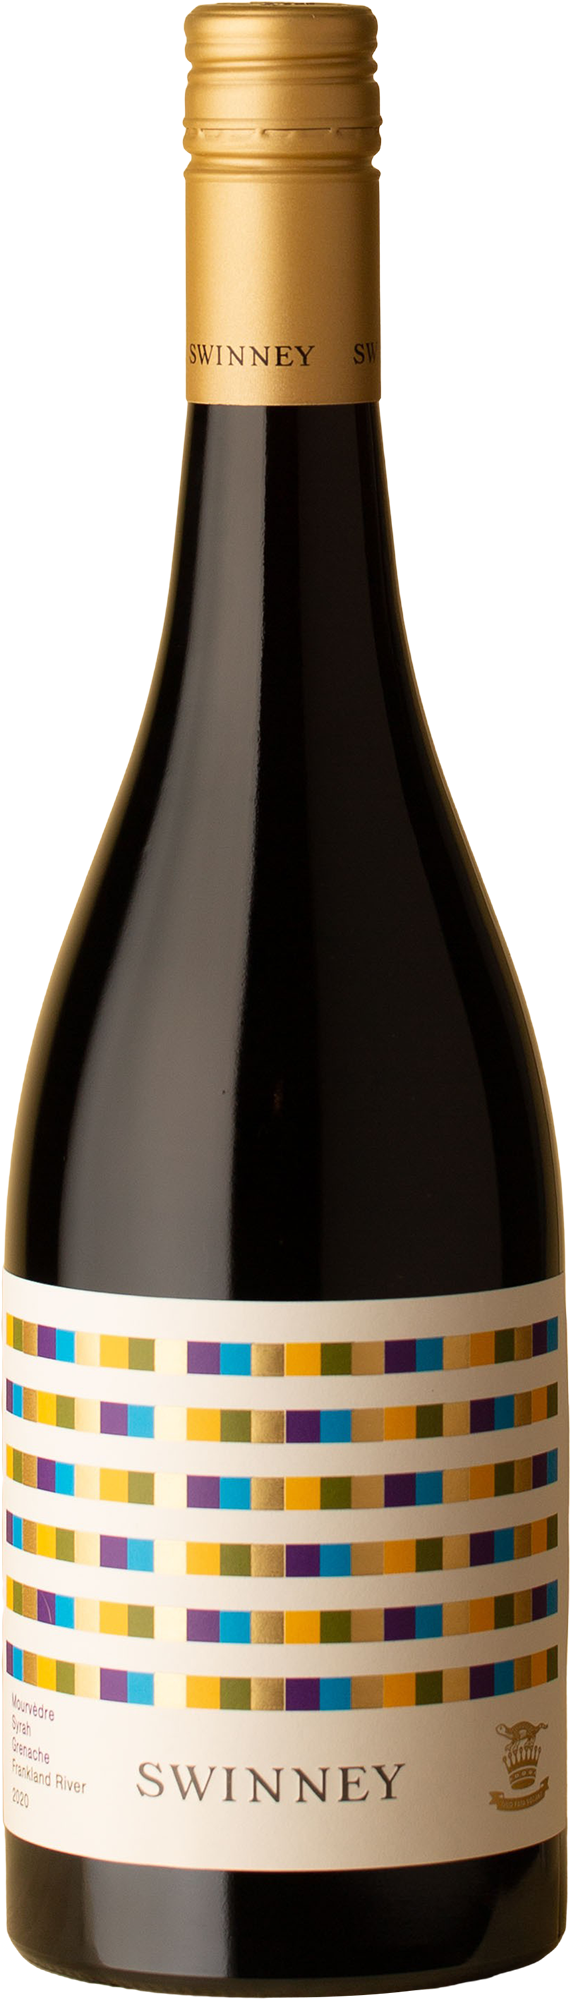 Swinney - Mourvèdre / Syrah / Grenache 2020 Red Wine